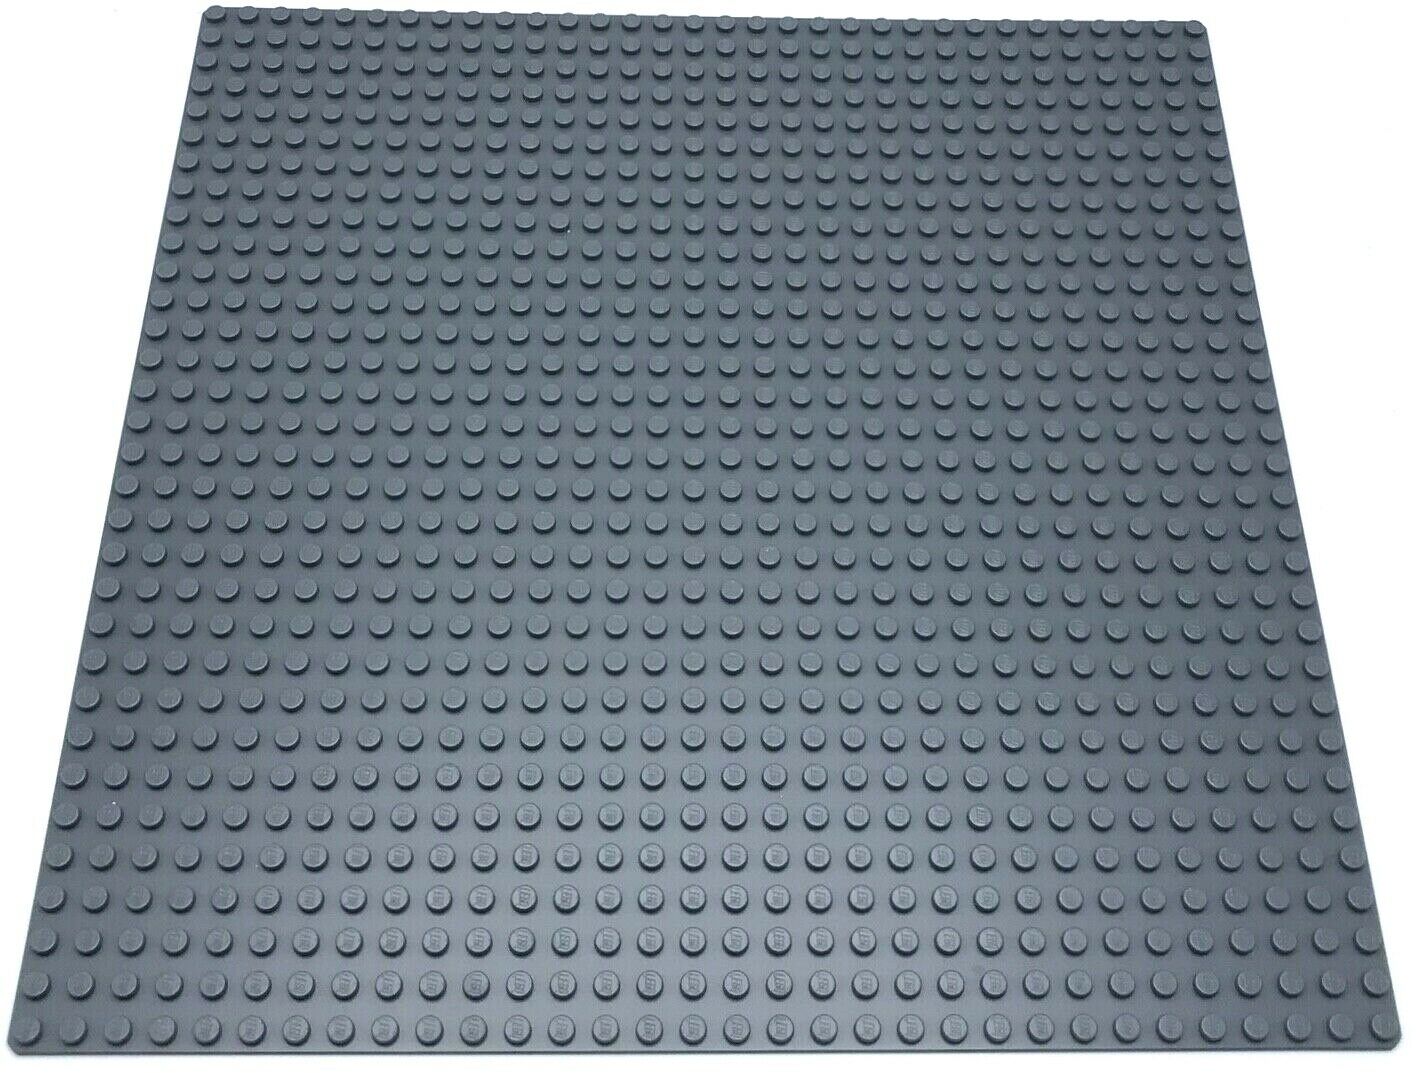 Lego New Dark Bluish Grey 32 X 32 Stud 10 X 10 Inch Plate Platform Baseplate